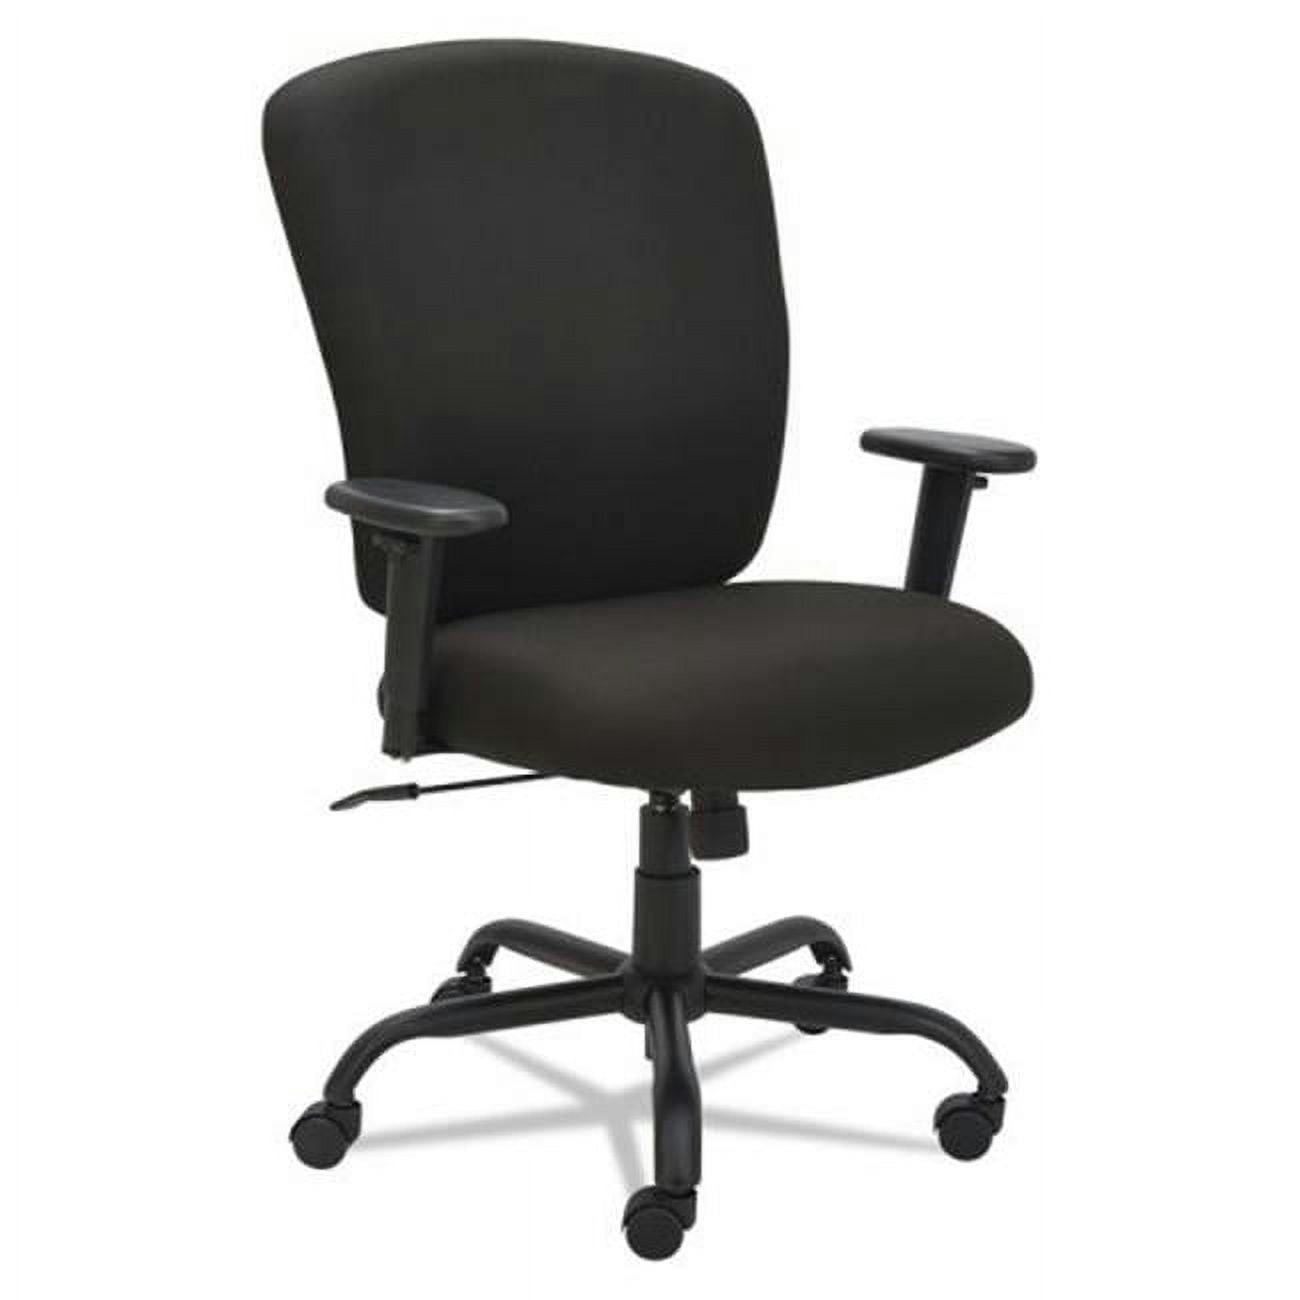 ErgoFlex Black Polyurethane Adjustable Office Chair with Swivel